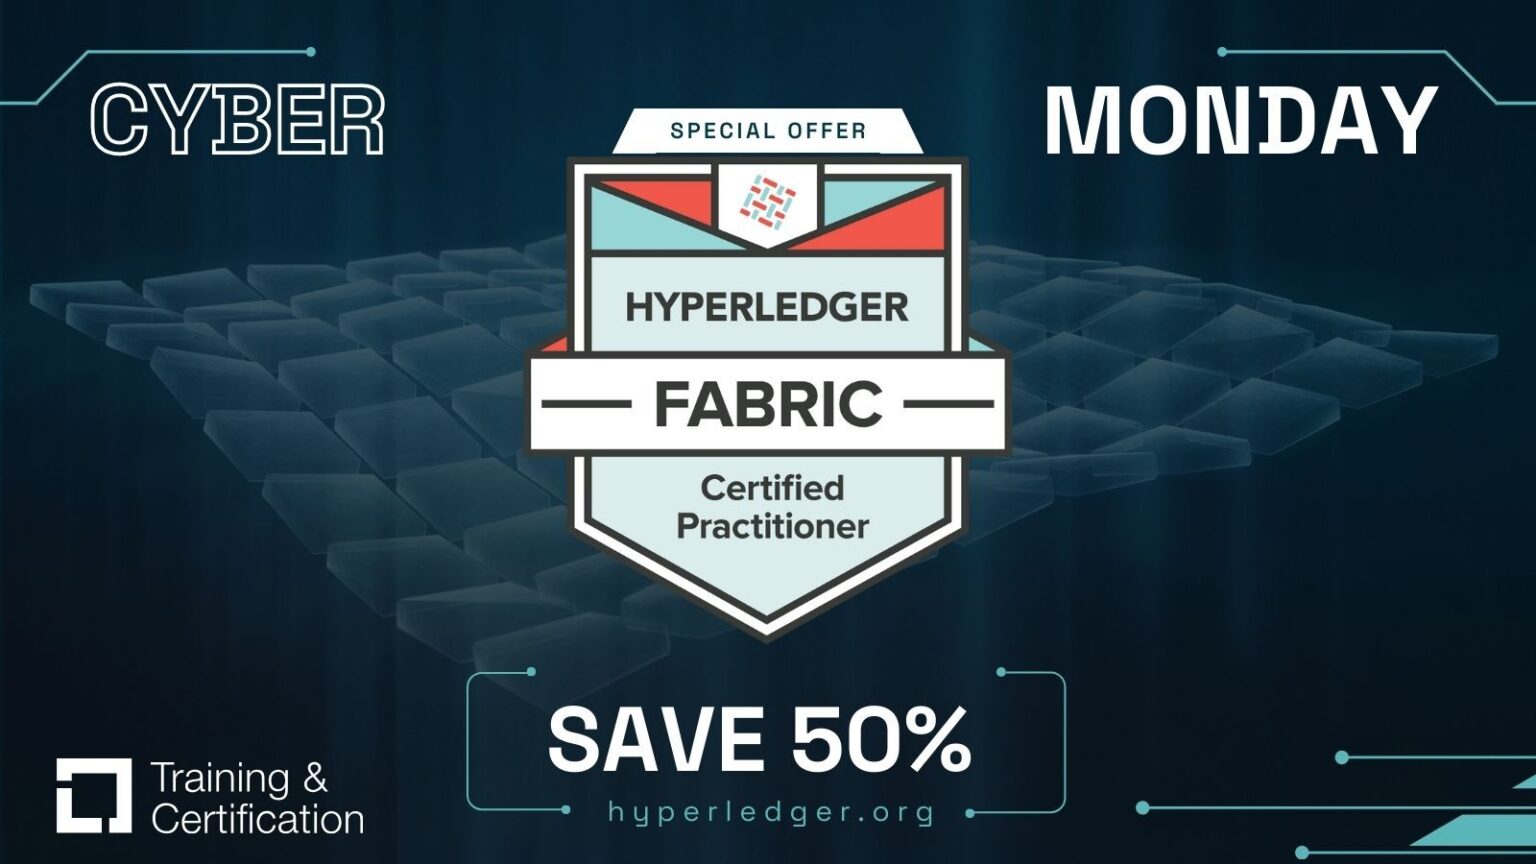 Hyperledger_fabric_certification_cyber_monday_1600-x-900-px-1536x864-1